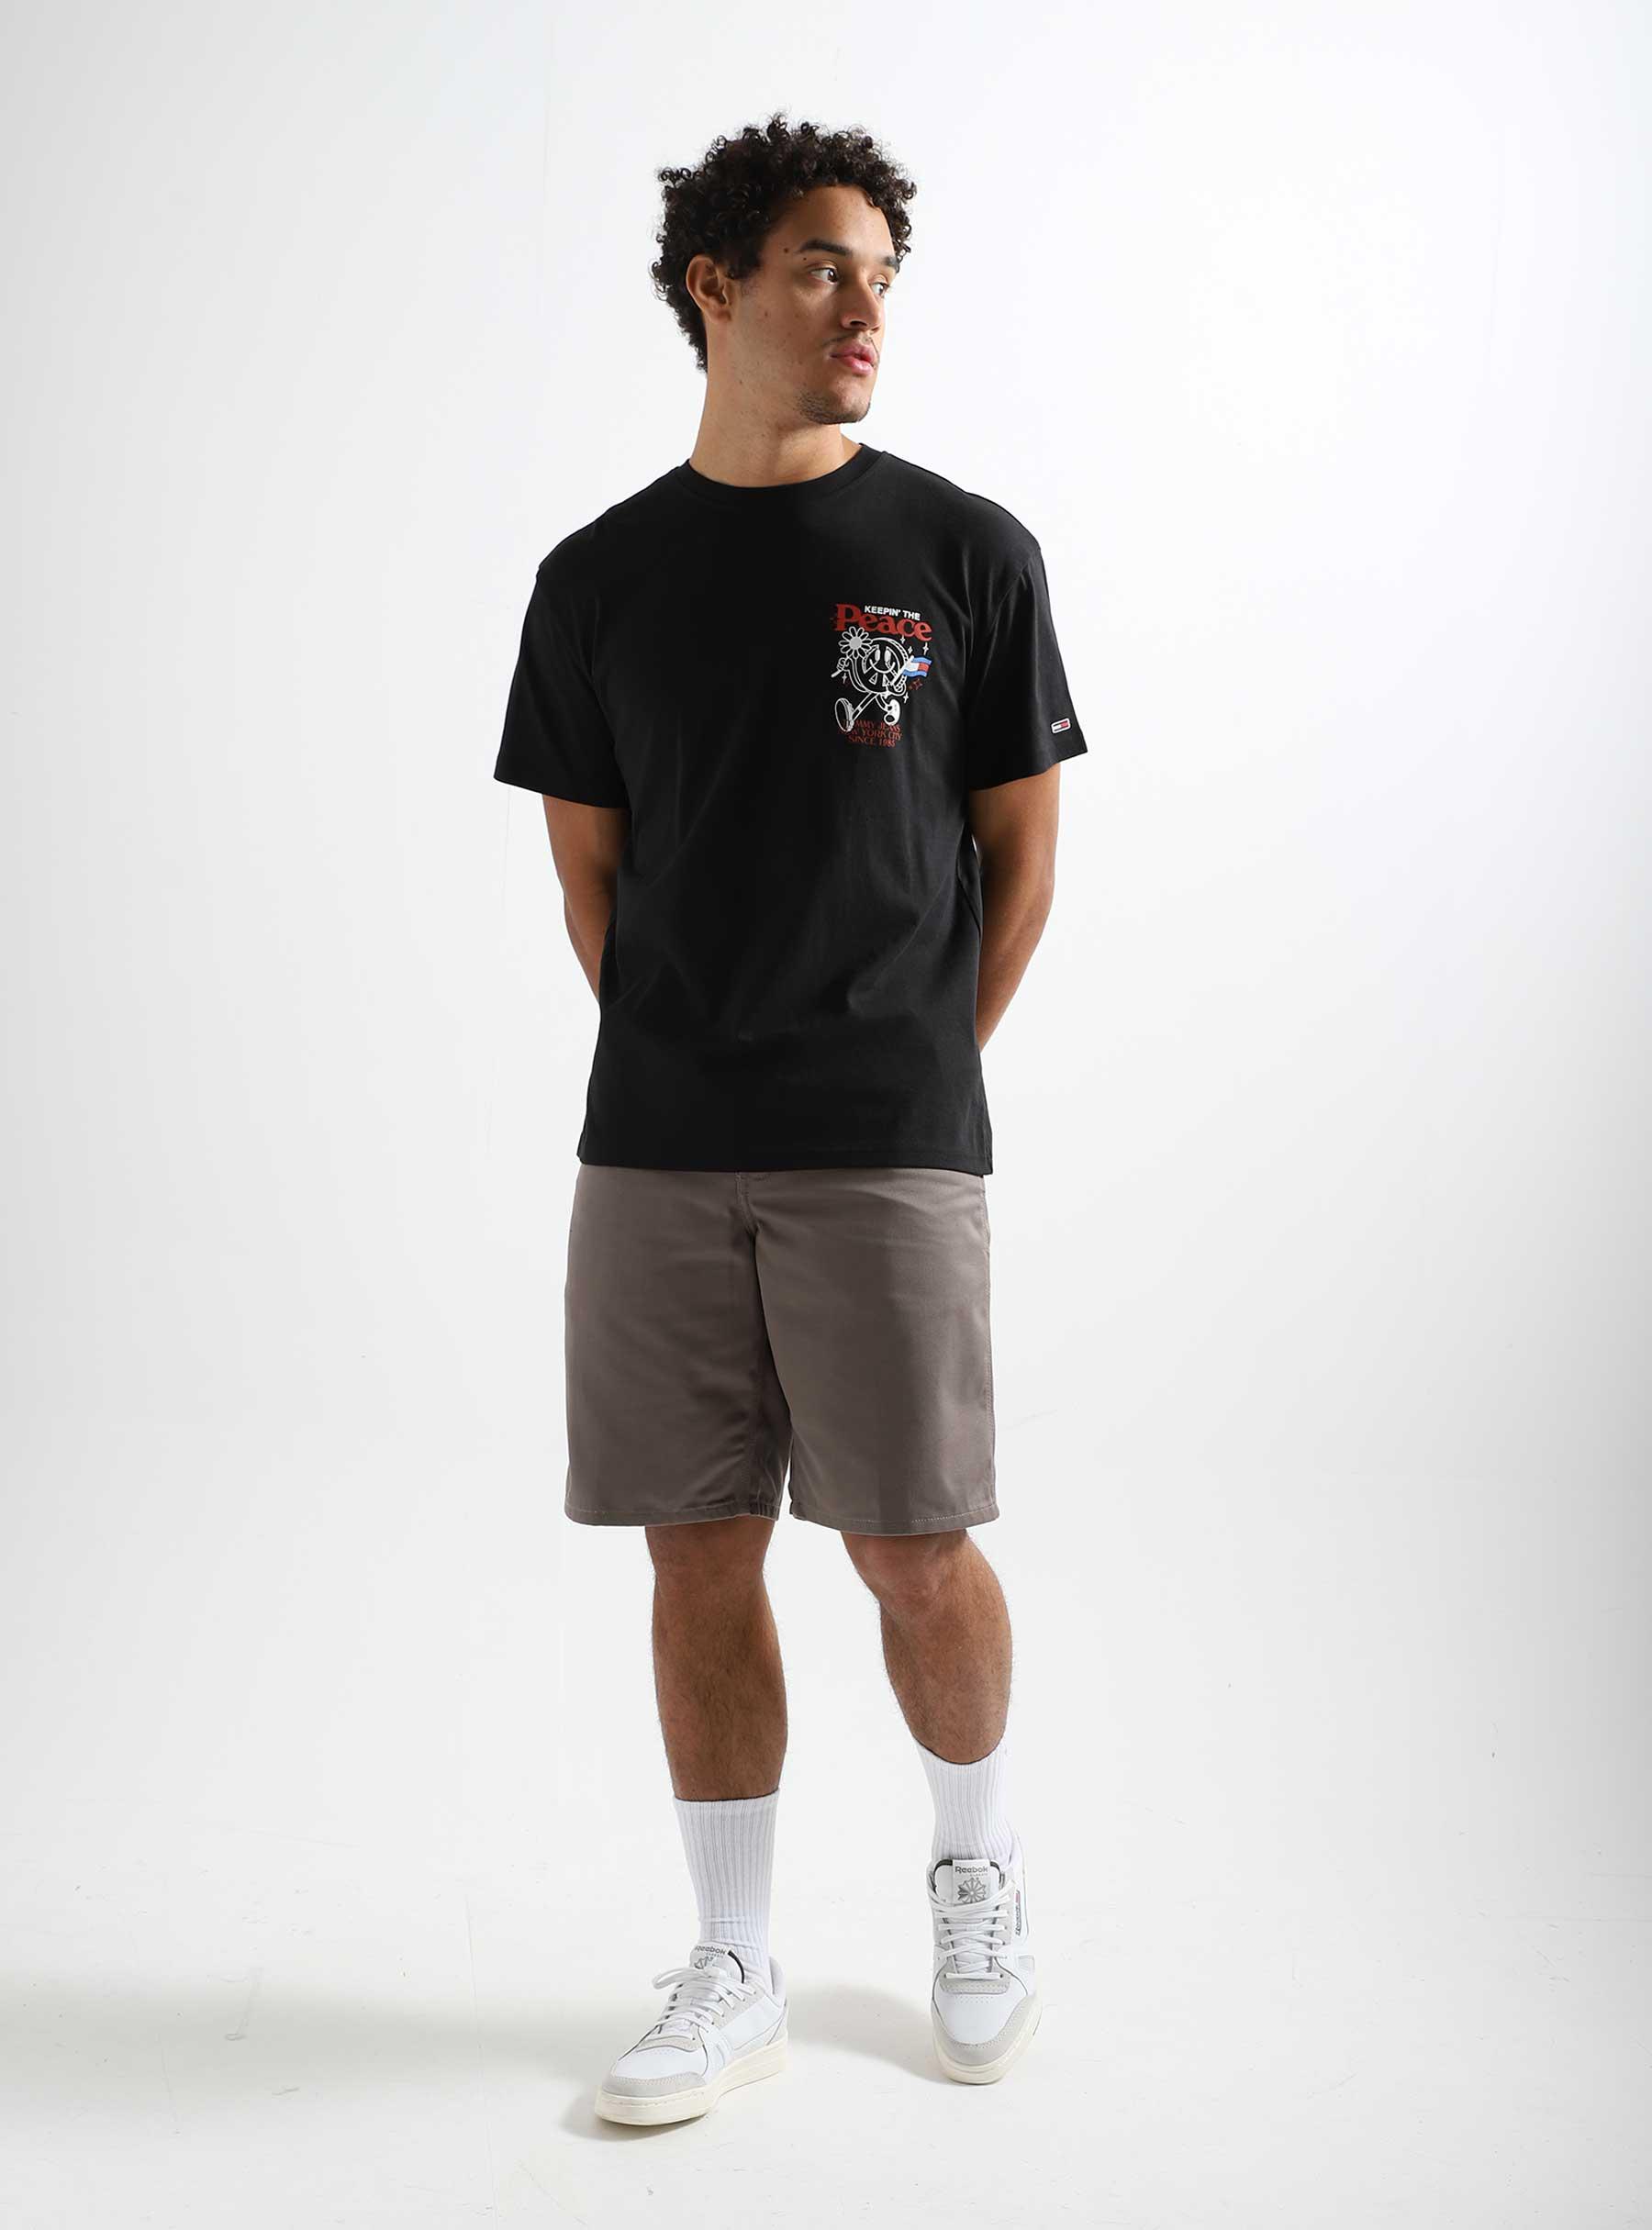 Homegrown Freshcotton TJM T-shirt Black Jeans - Tommy Smiley